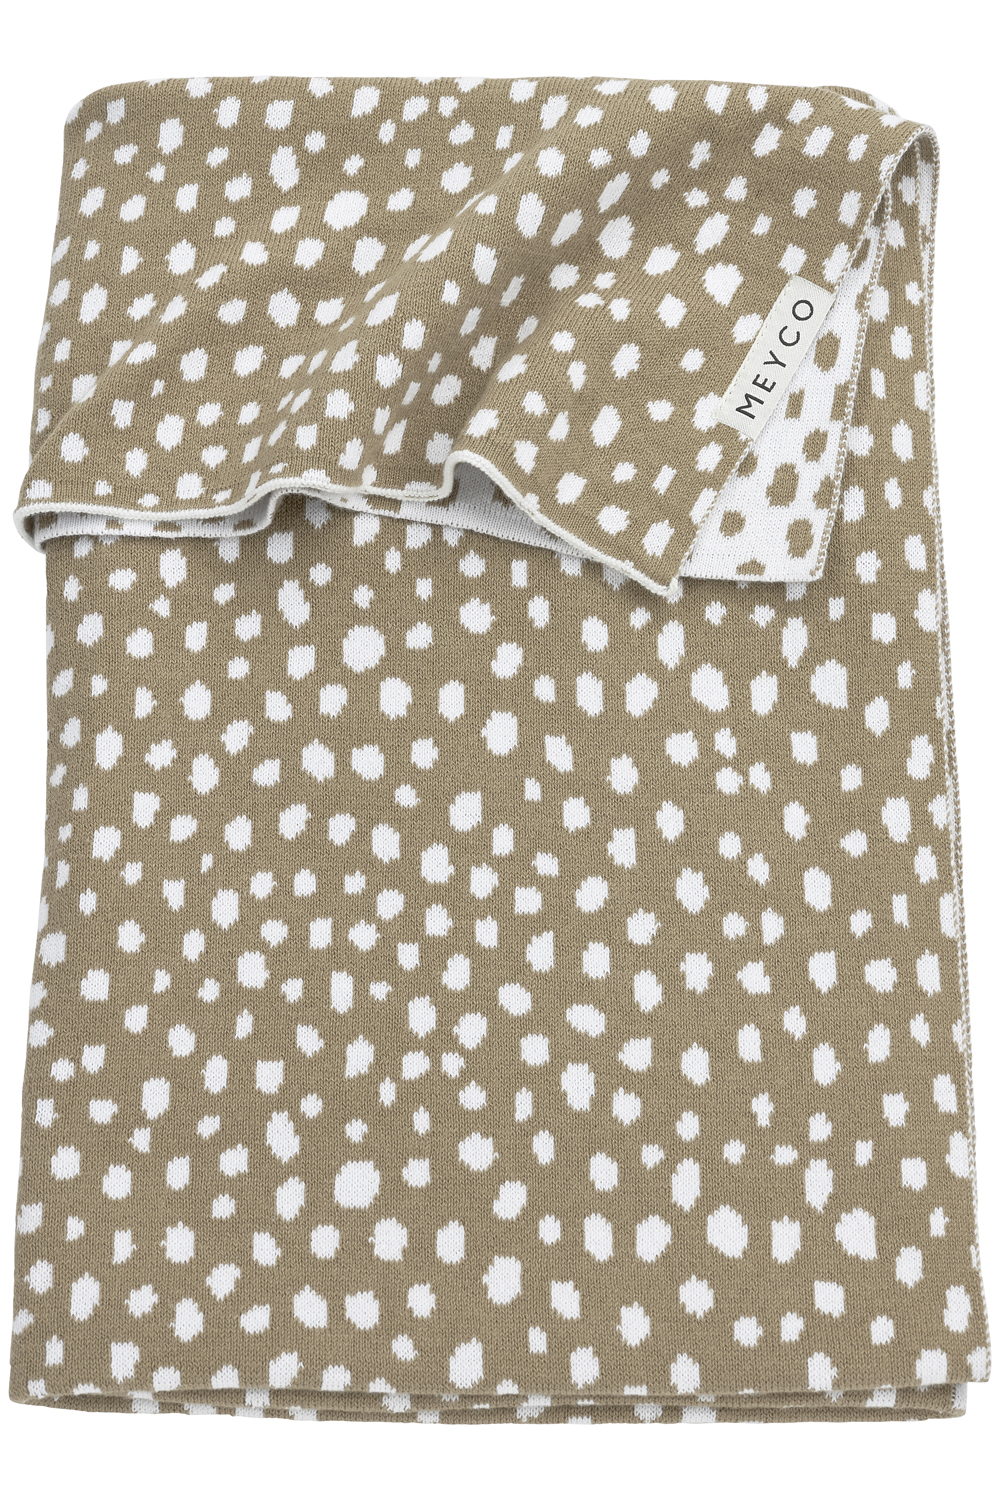 Crib bed blanket Cheetah - taupe - 75x100cm